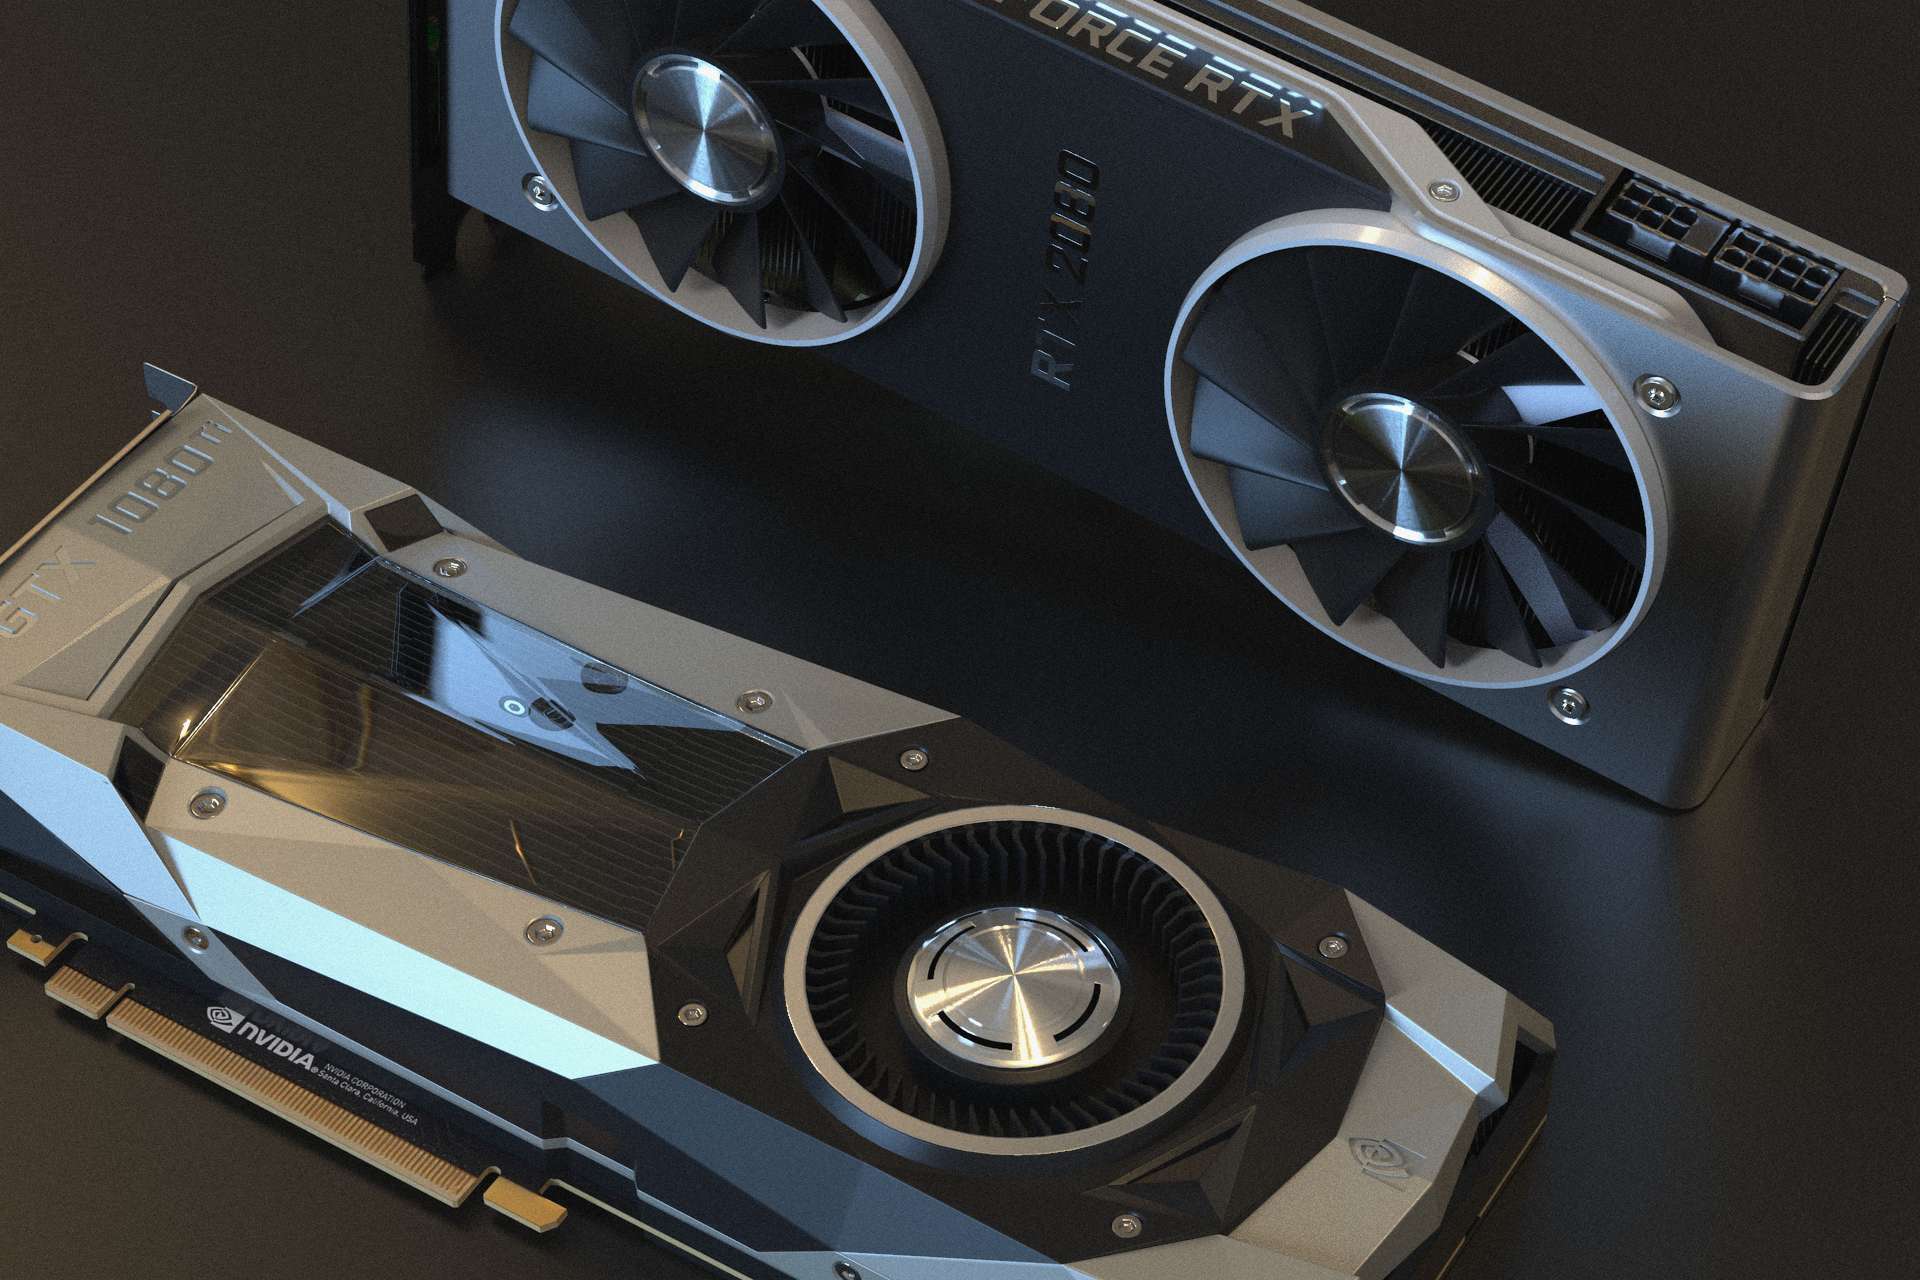 NVIDIA GPUs close up